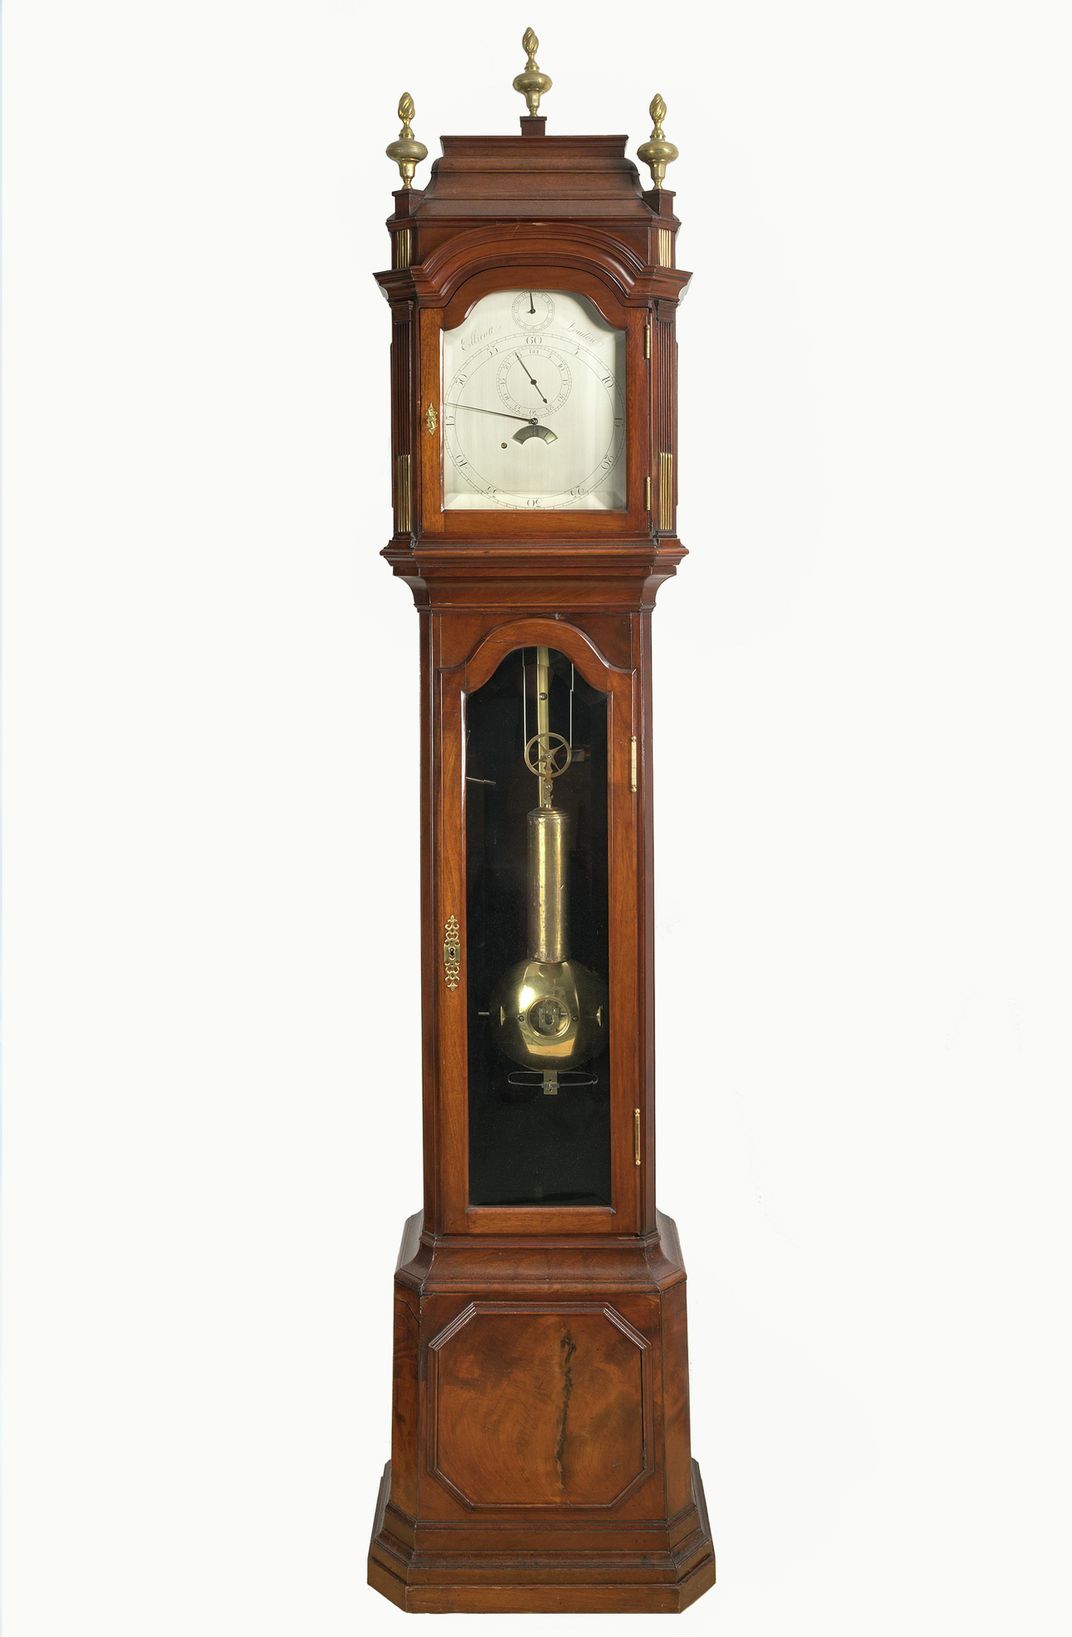 An Ellicott astronomical regulator, or pendulum clock, used during Williams' expedition